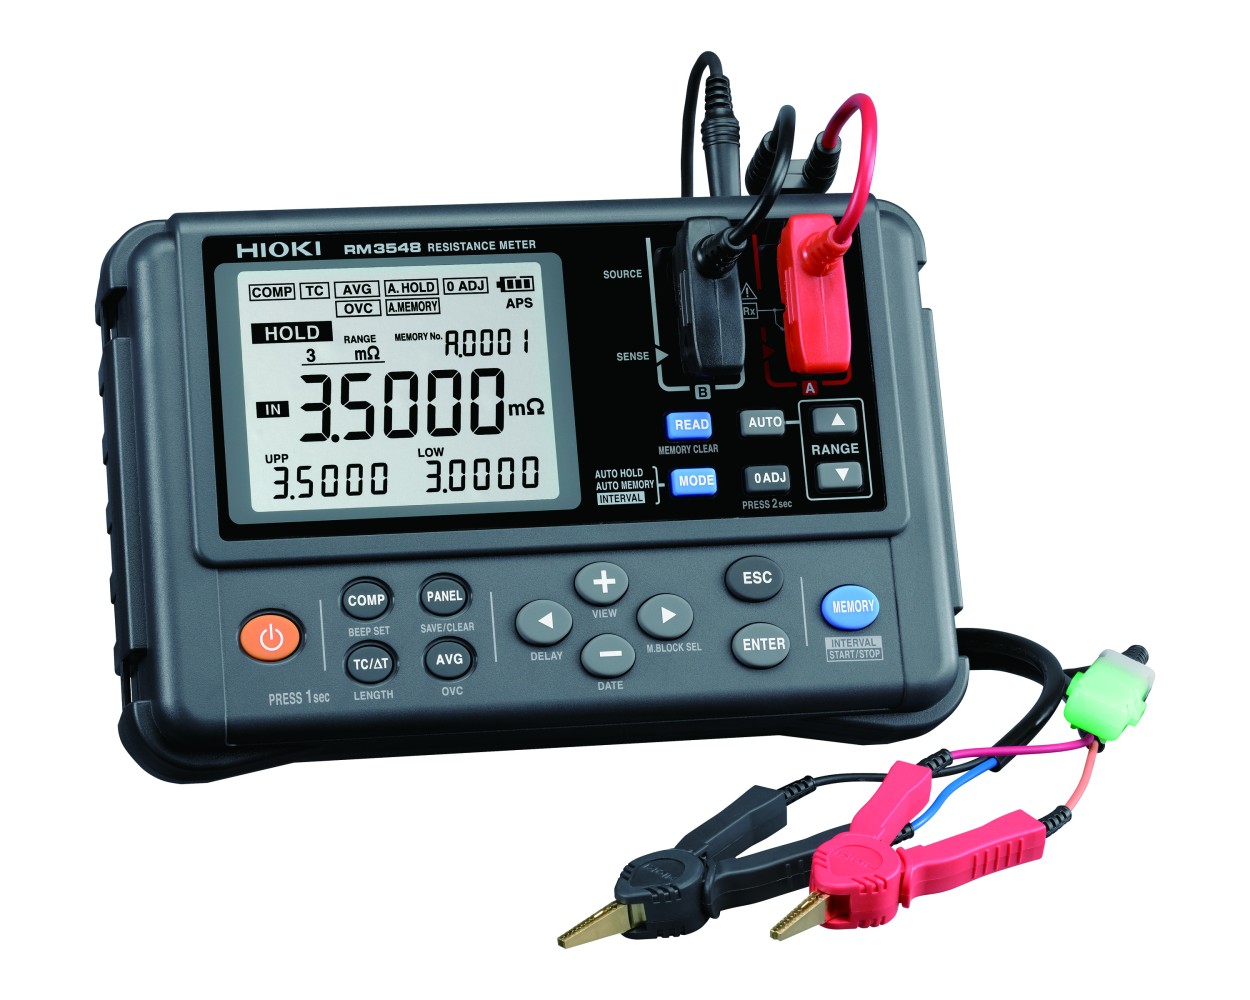 The portable resistance meter RM3548 from HIOKI.jpeg.jpg